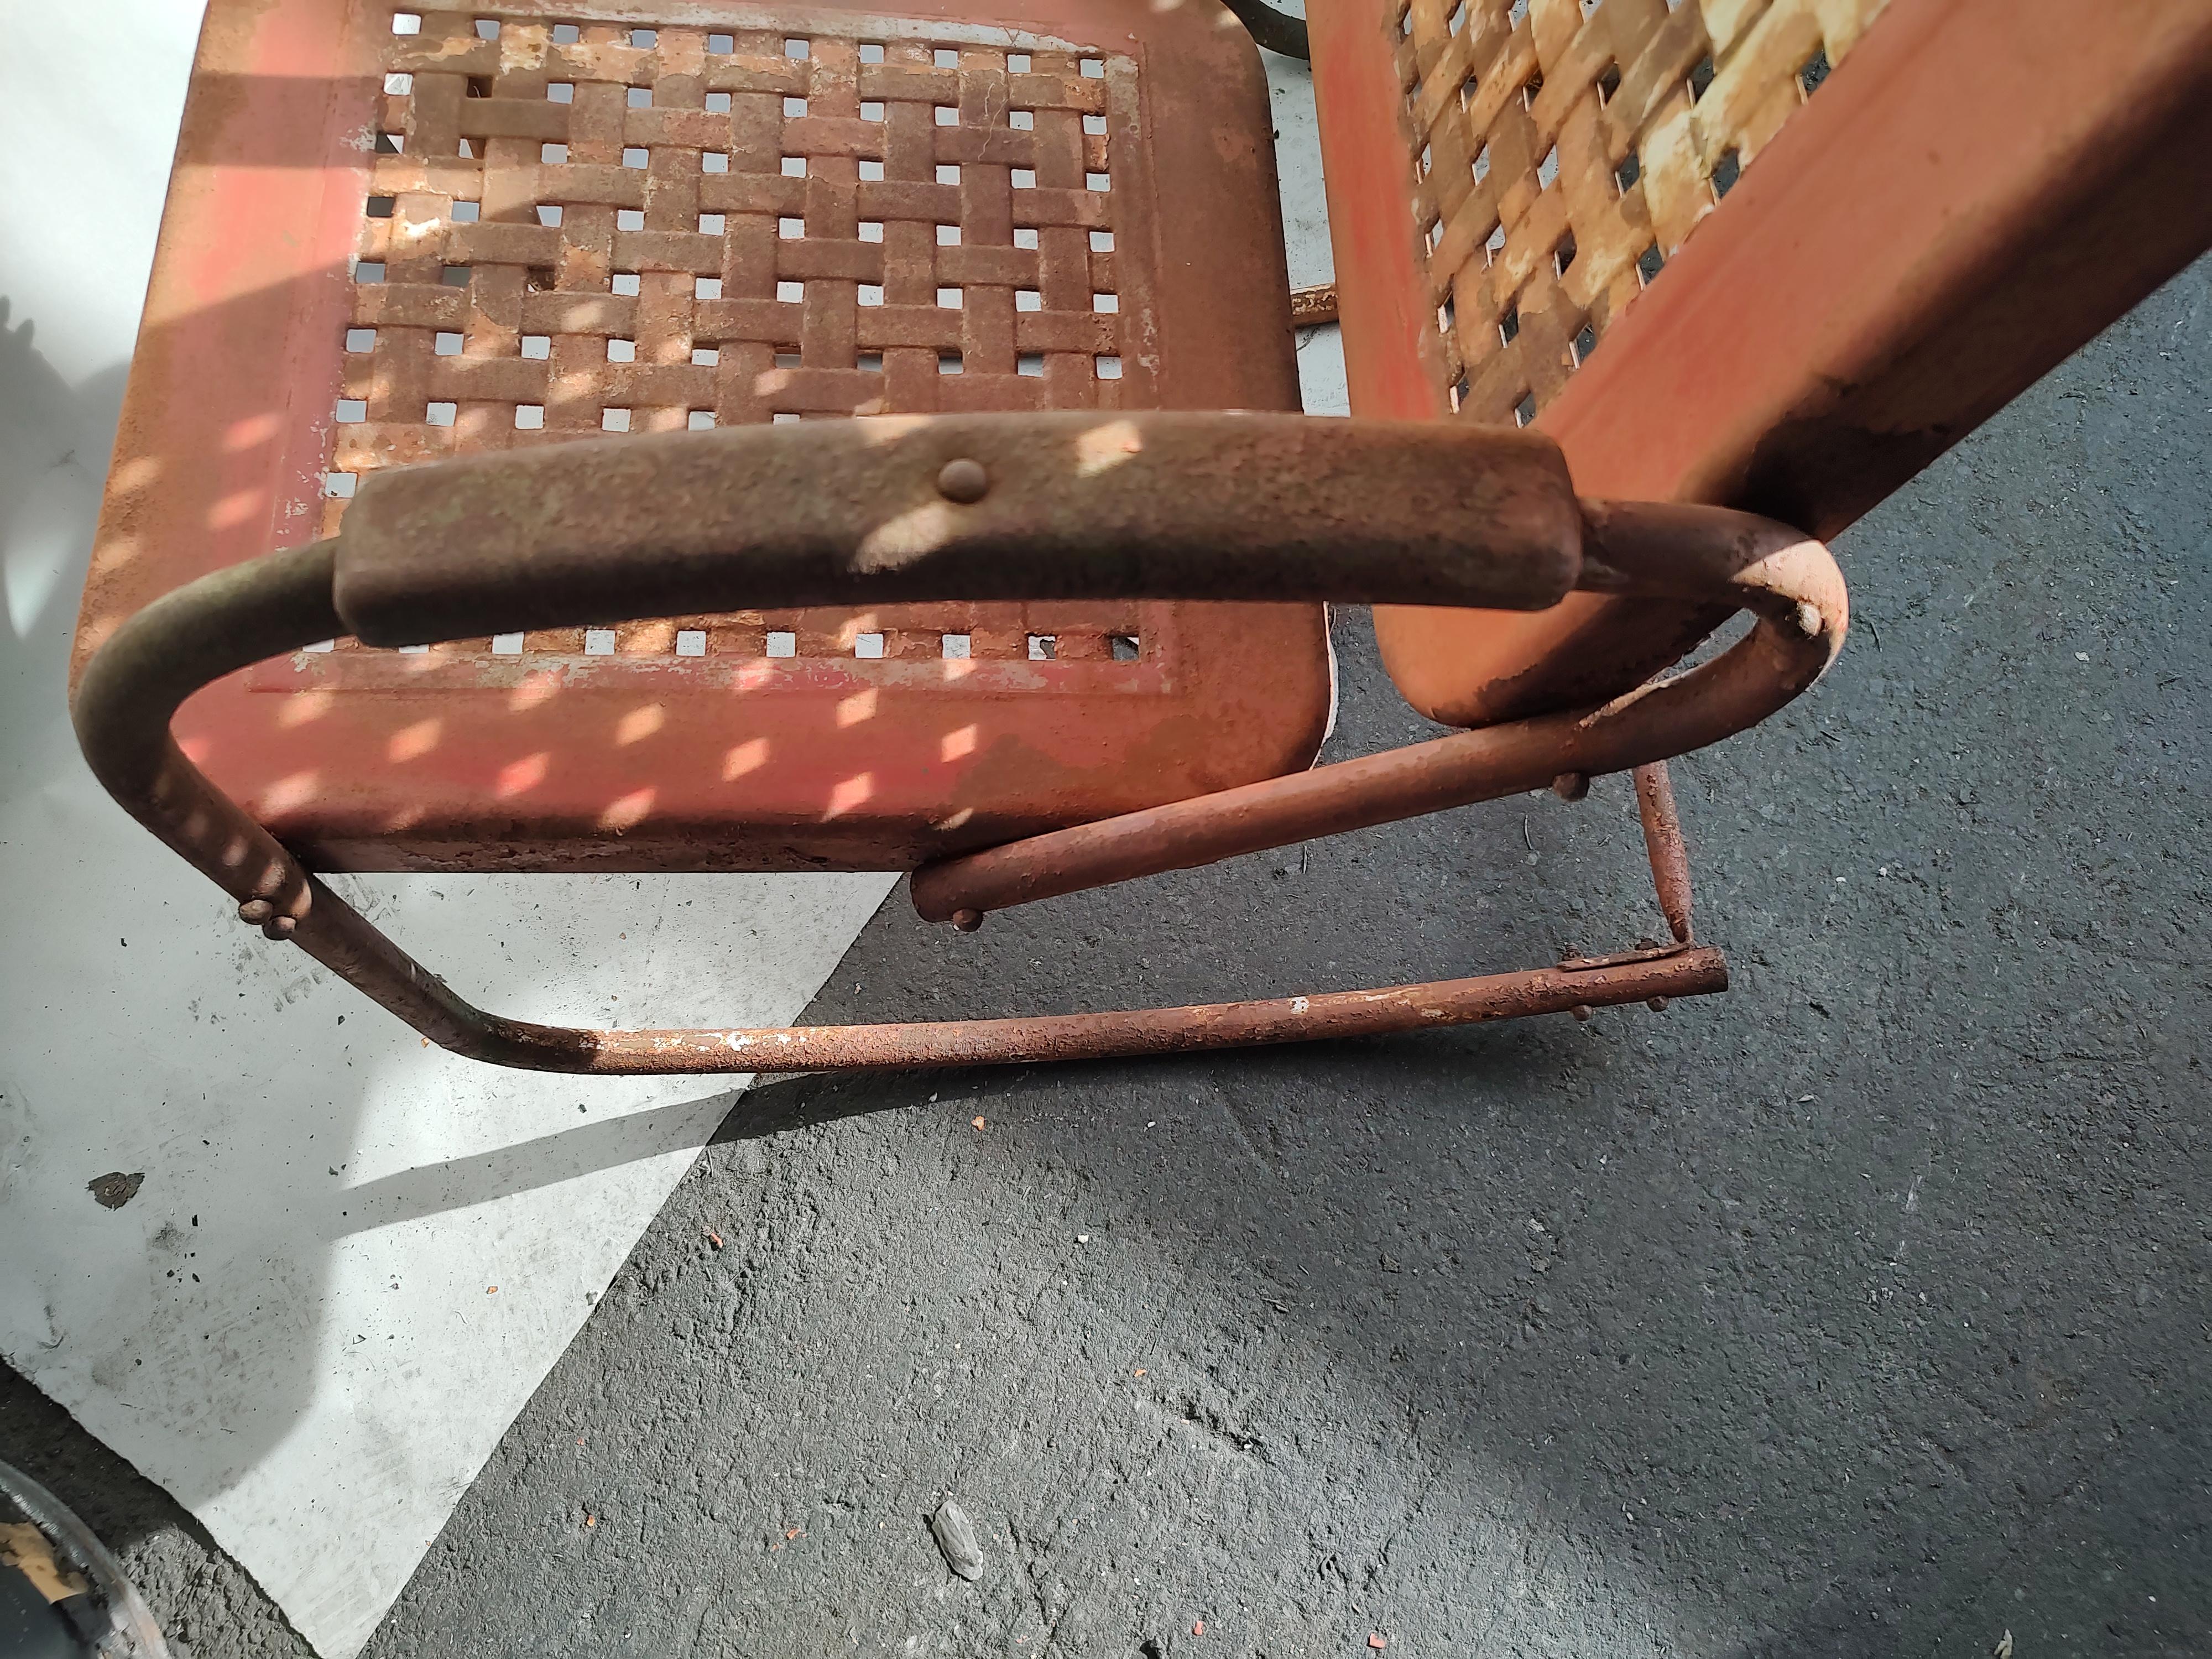 vintage metal lawn chairs original colors